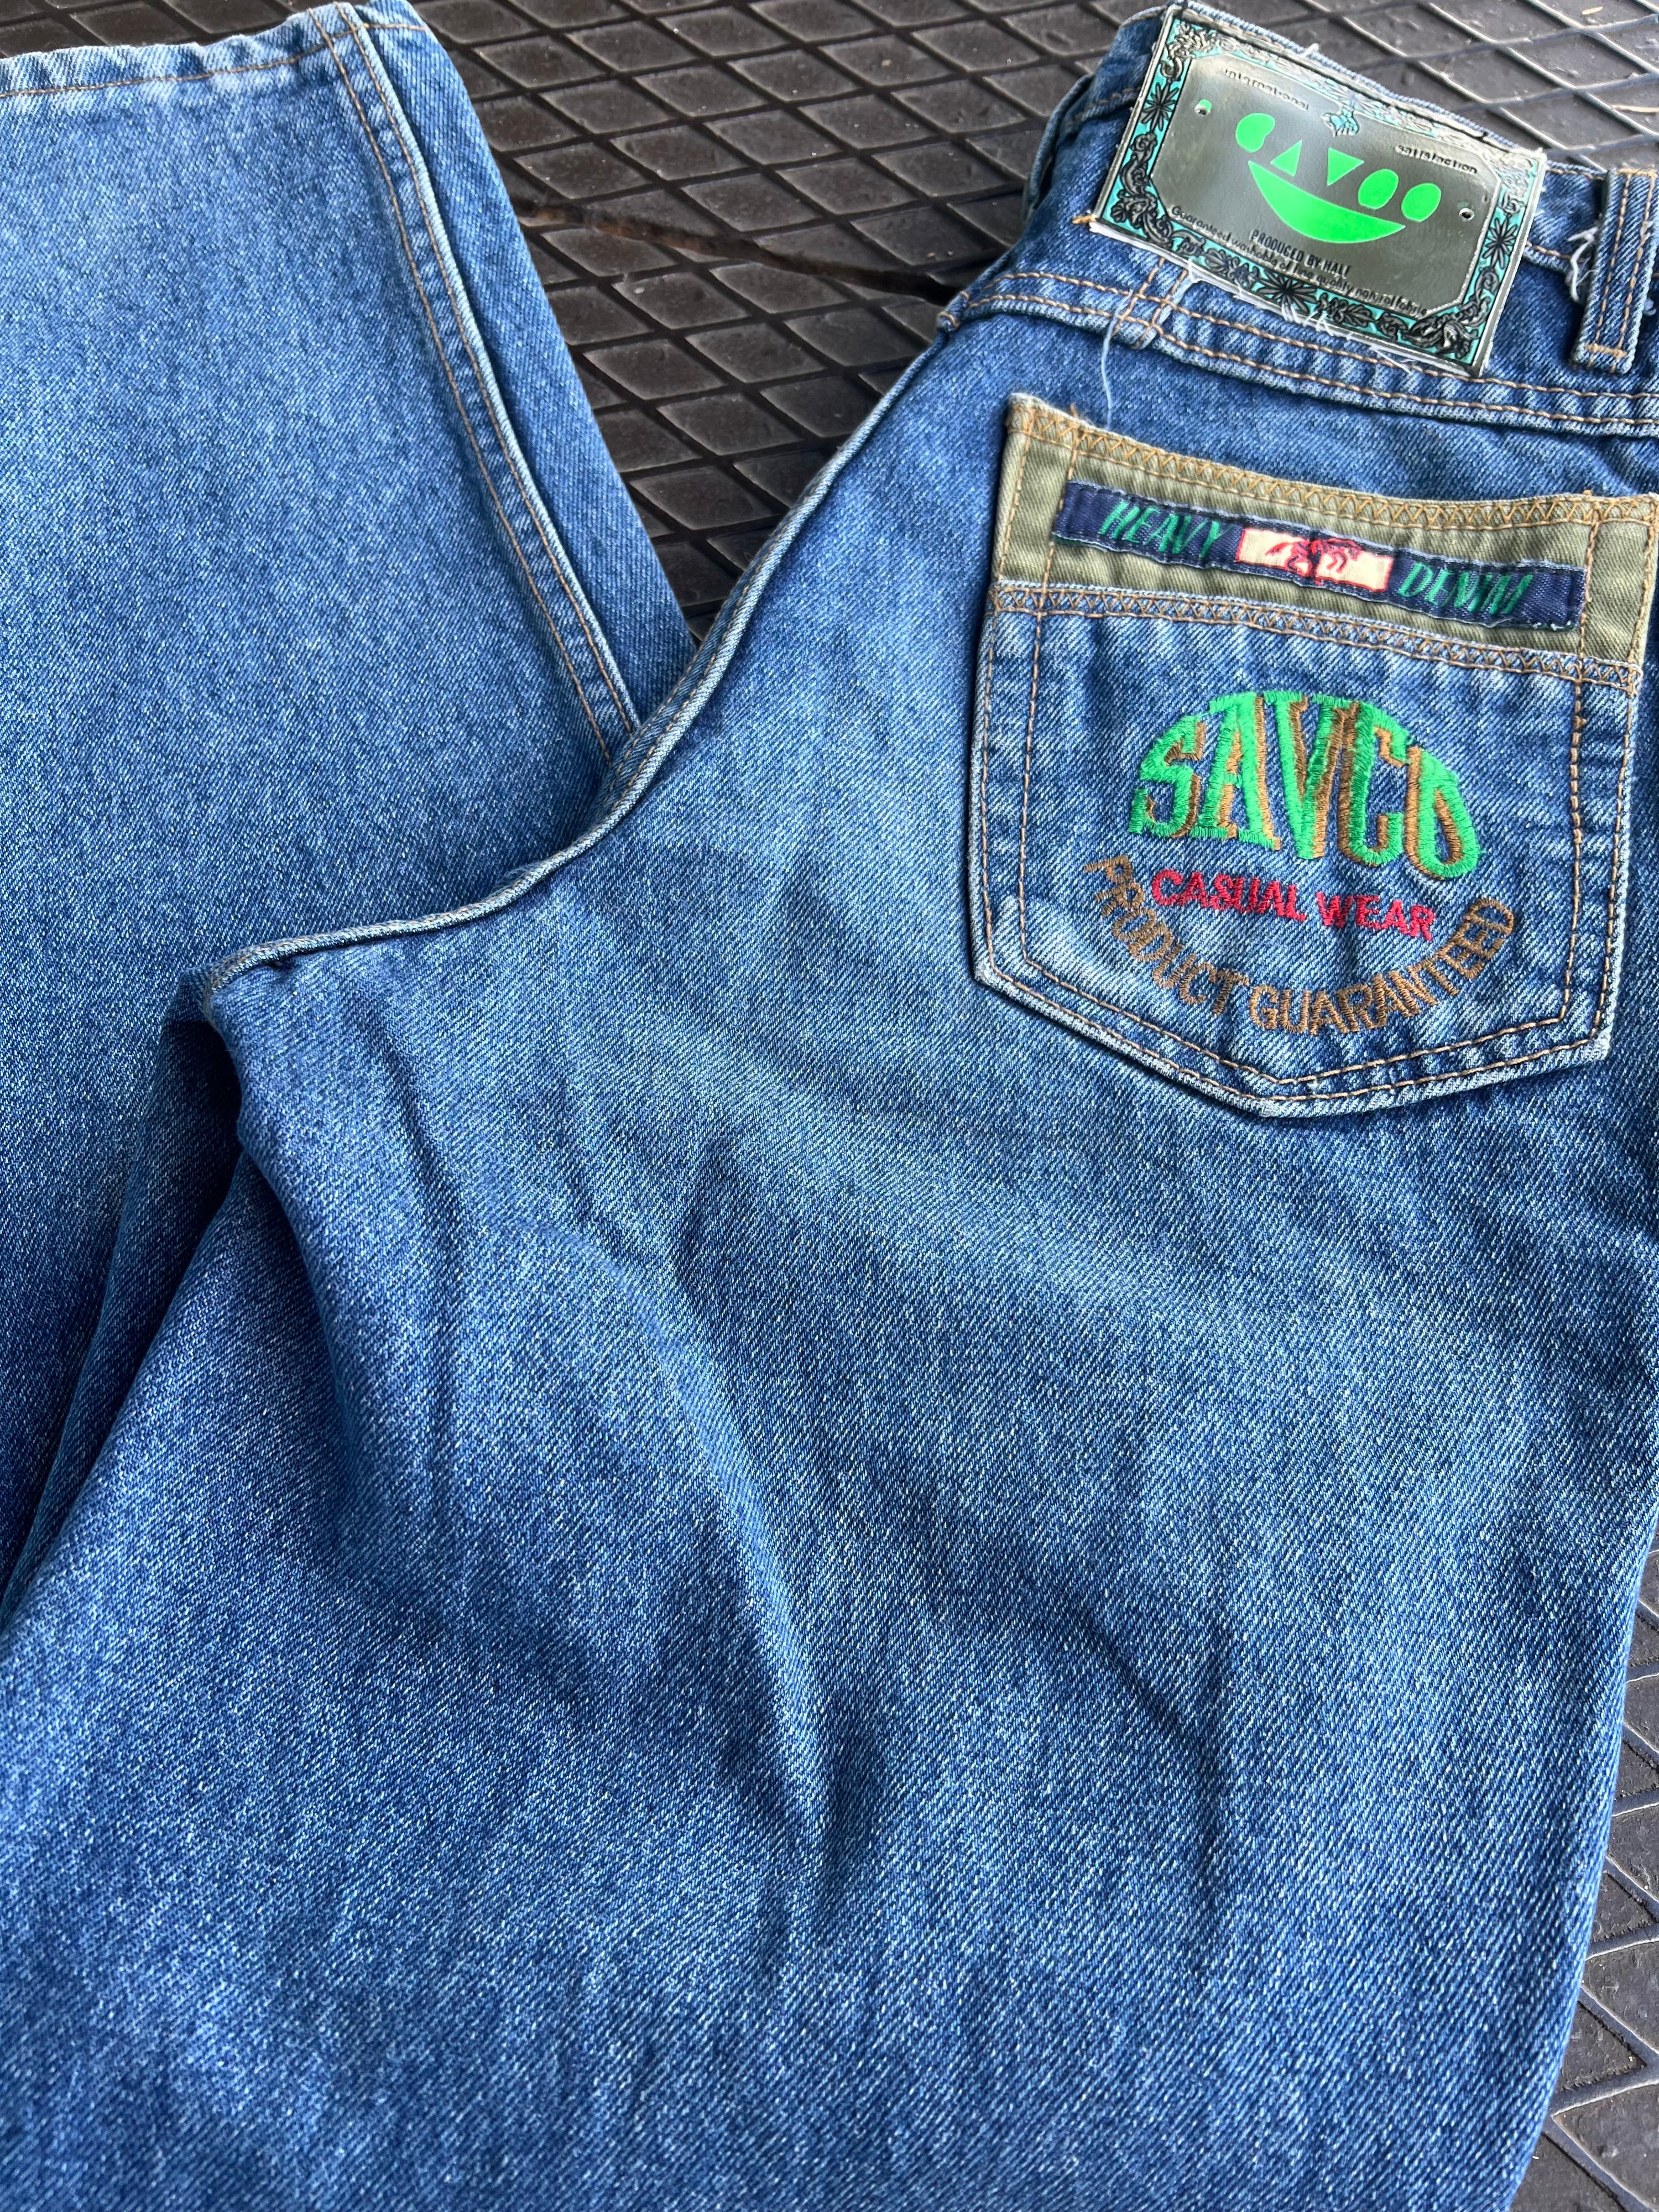 29 - Savco Embroidered Heavy Denim Jeans